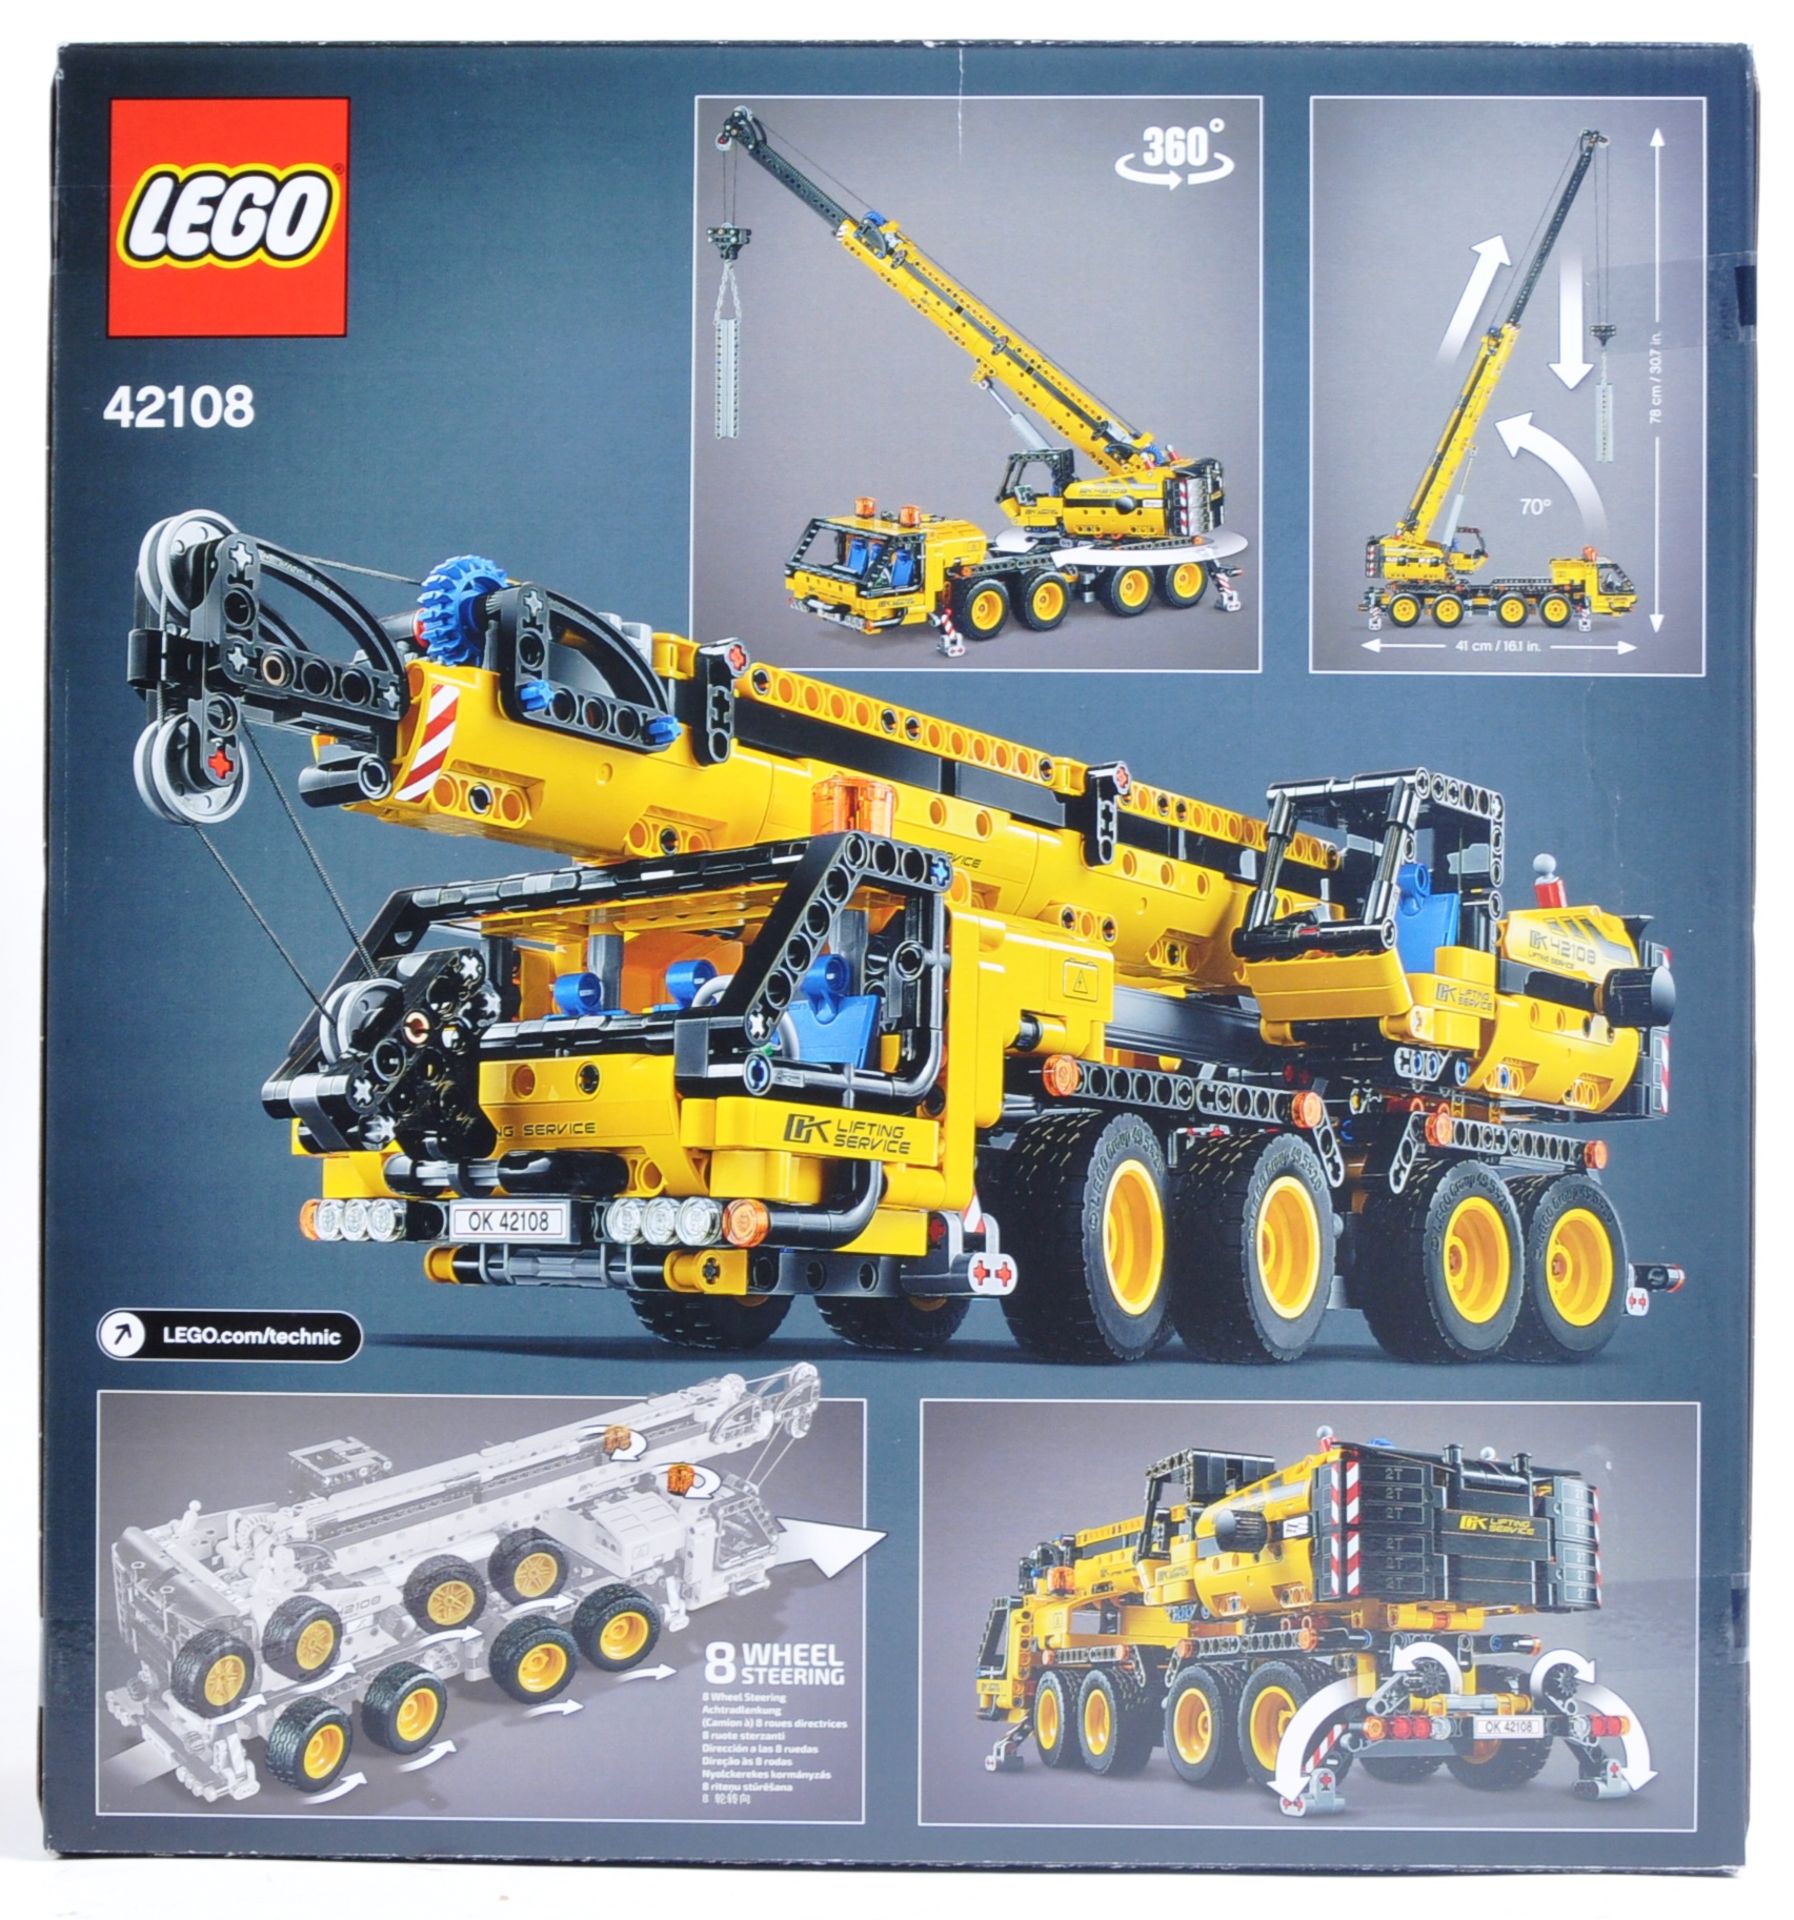 LEGO SET - LEGO TECHNIC - 42108 - MOBILE CRANE - Image 2 of 4